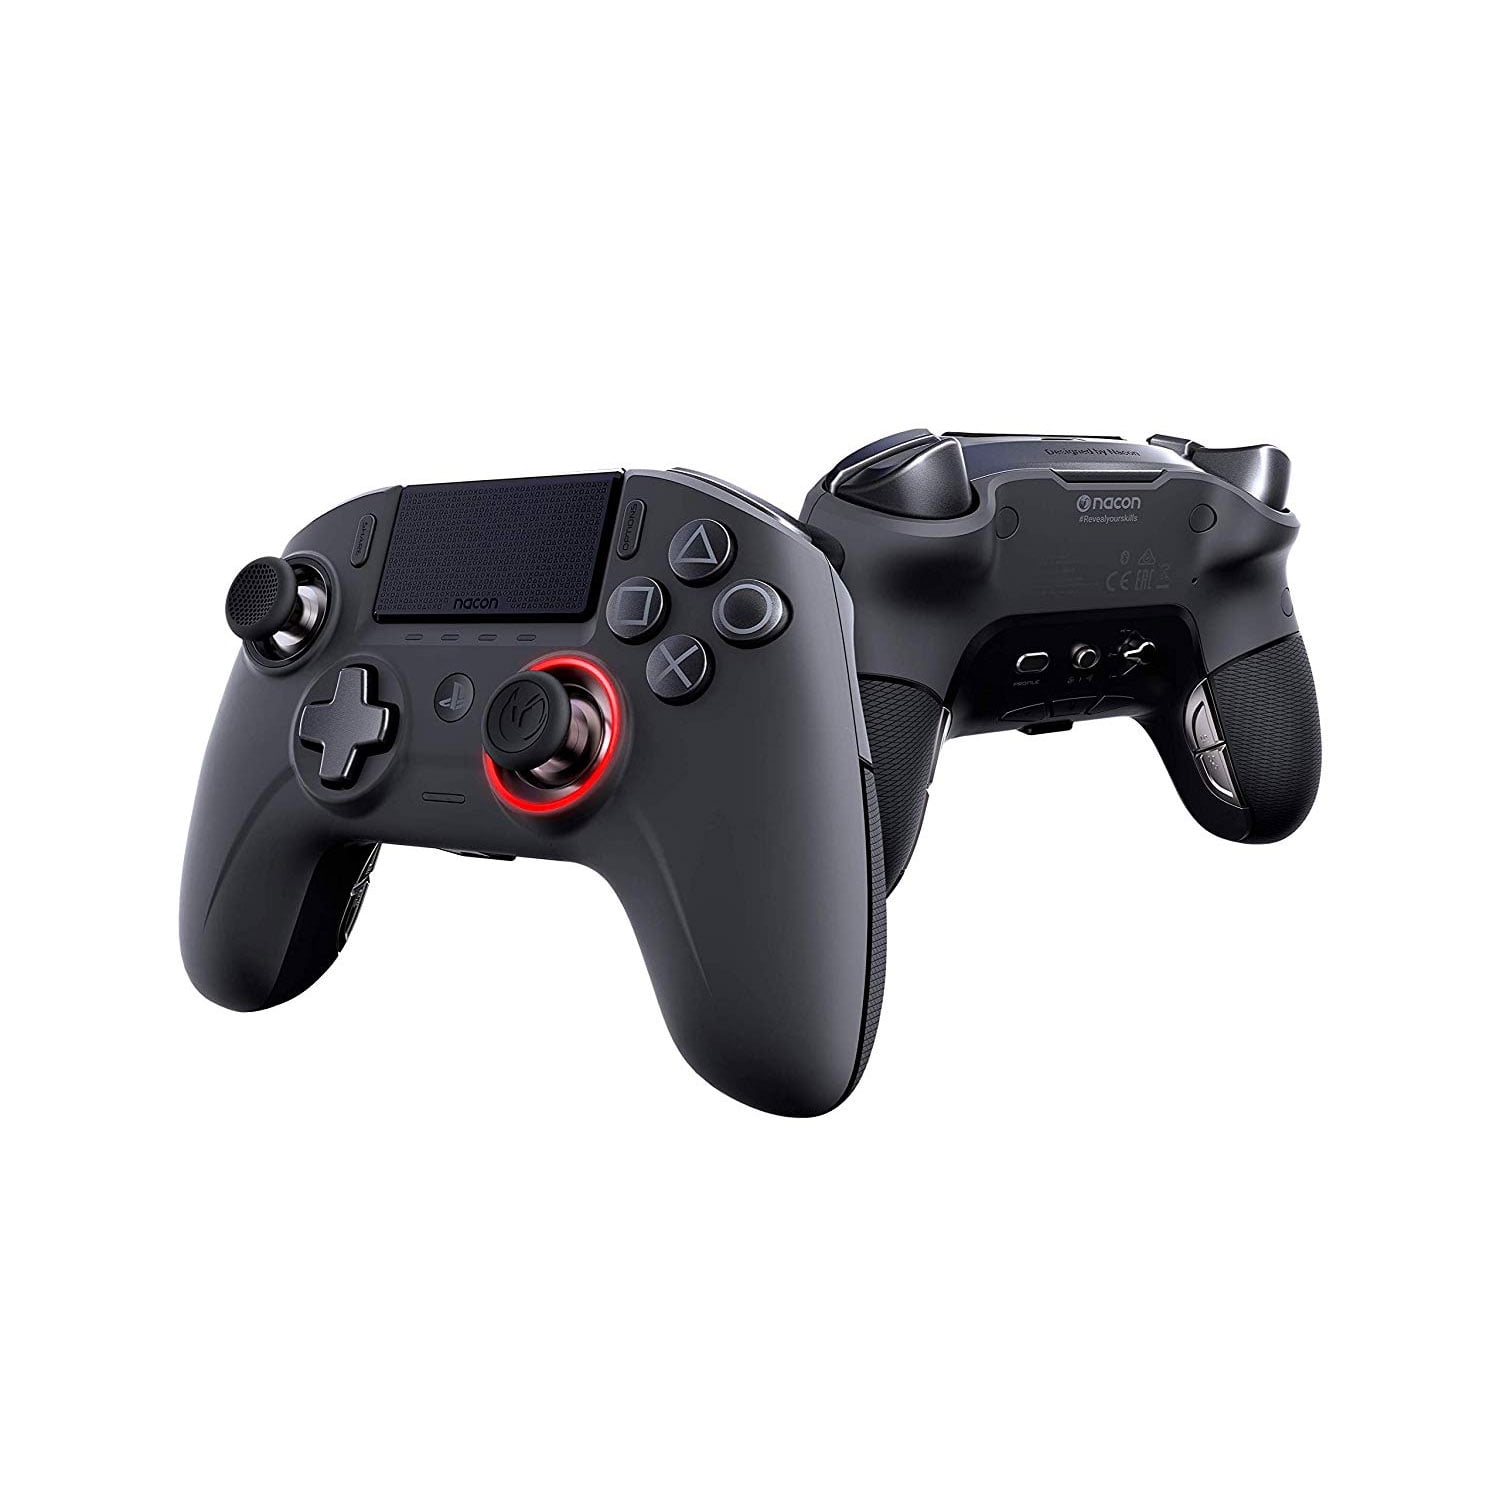 Nacon Revolution Pro V2 Wired Controller Black For PS4 Video Game